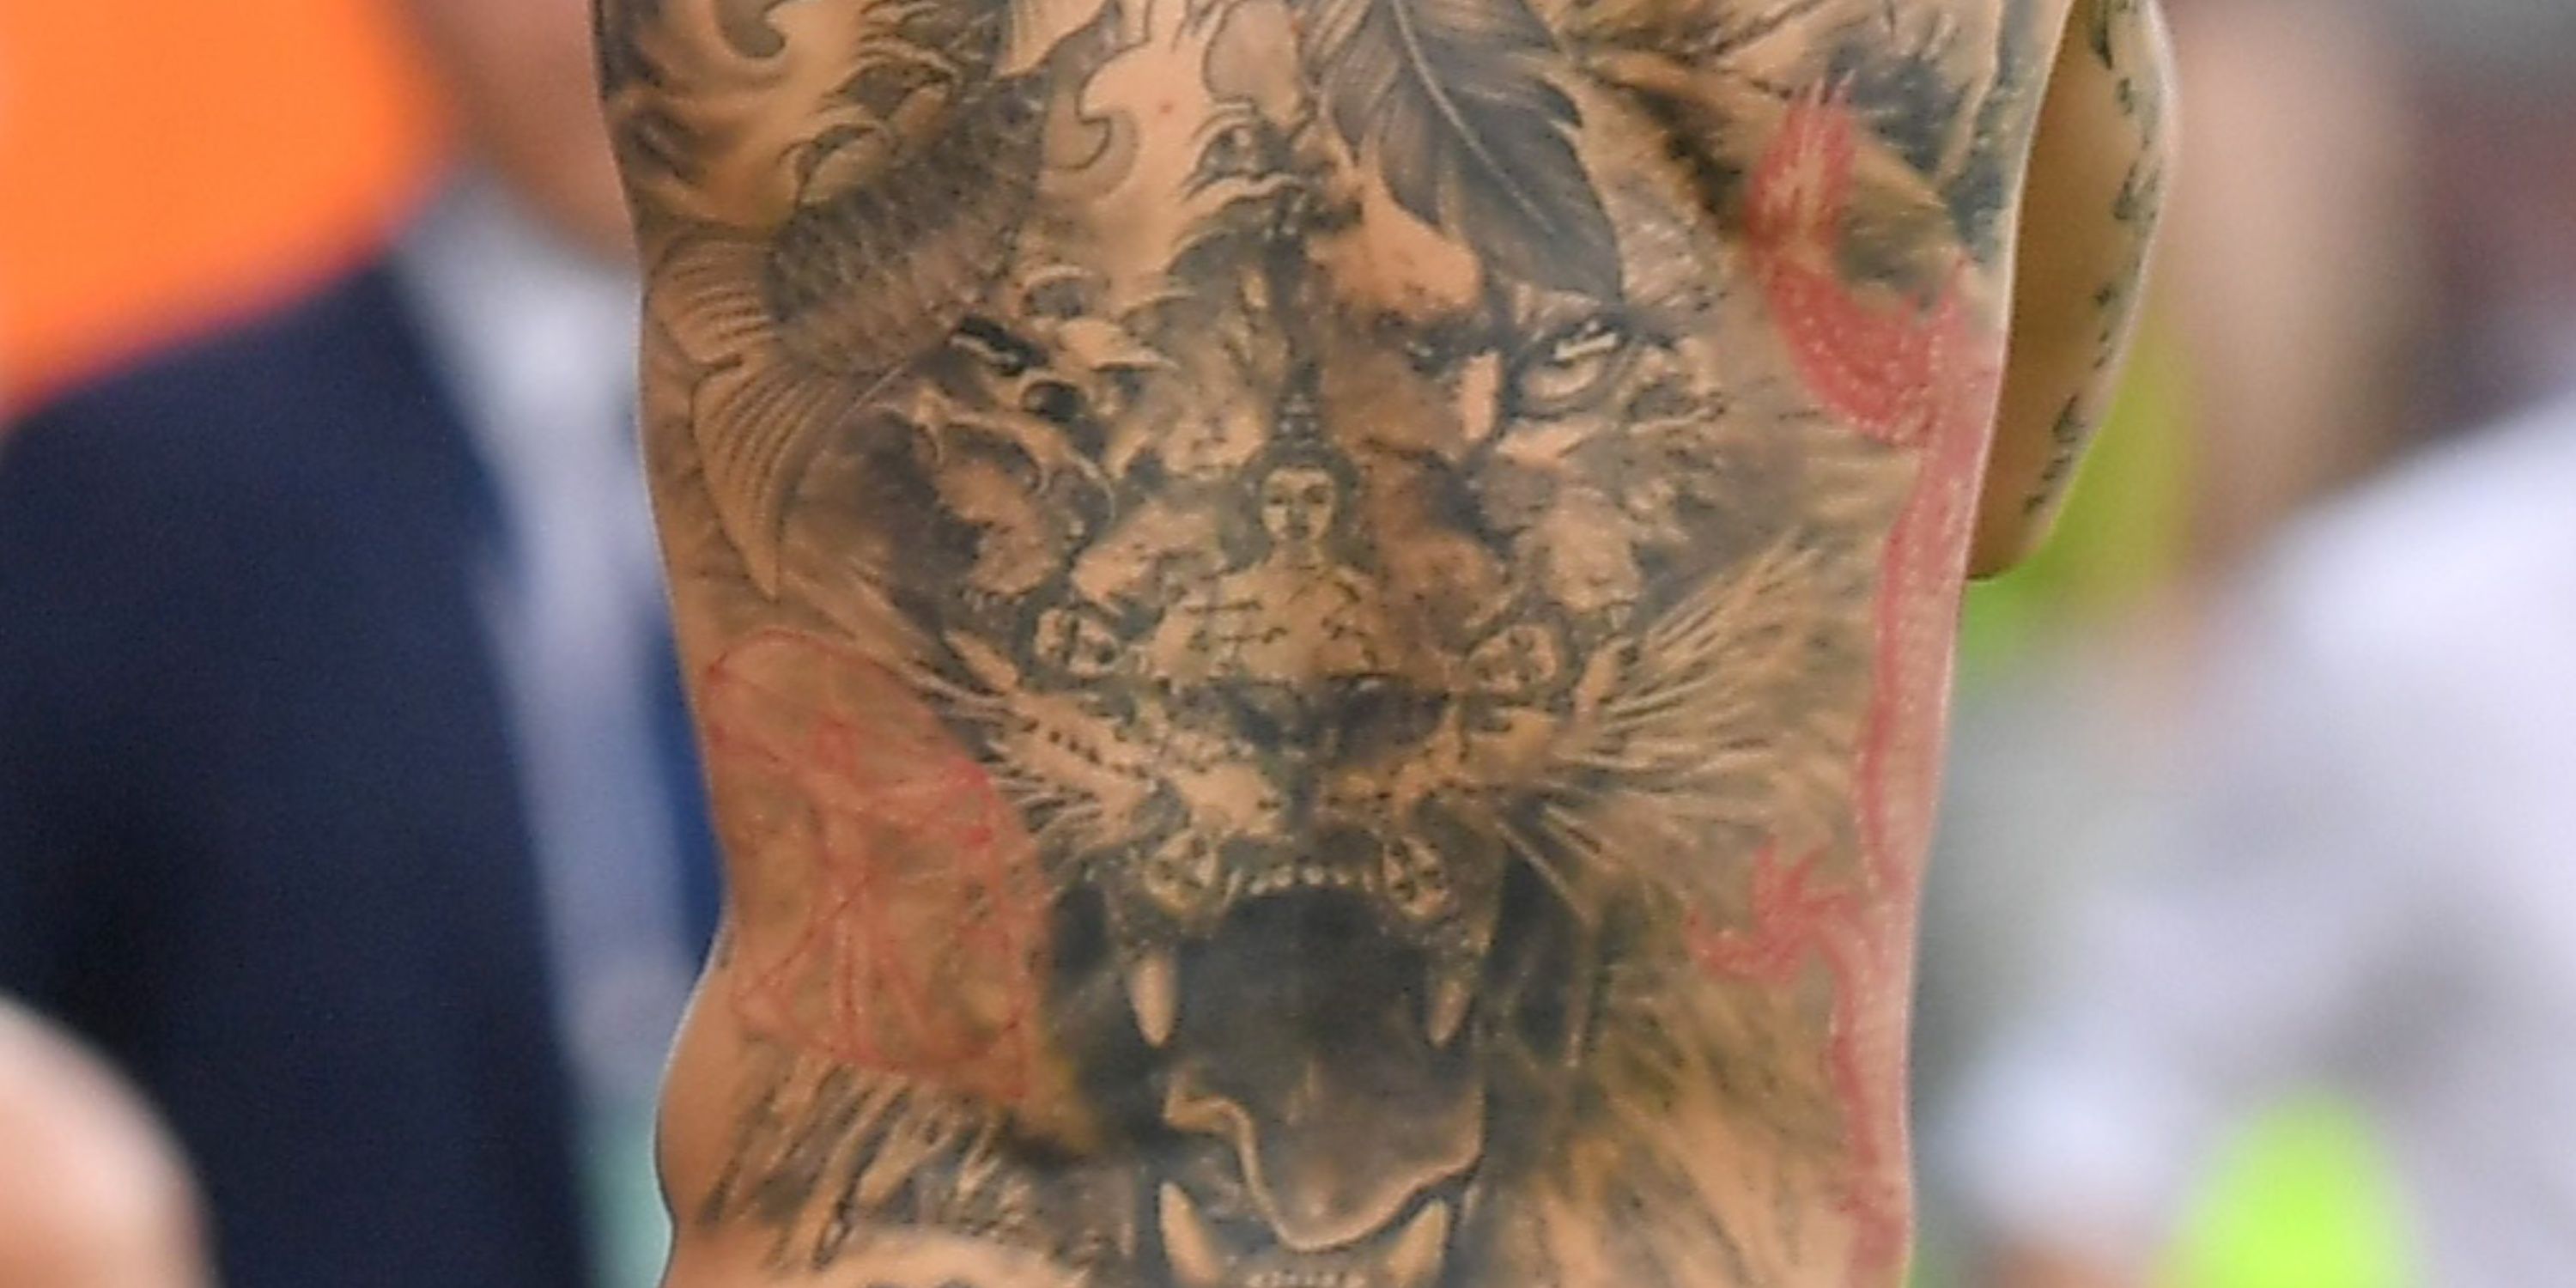 Zlatan Ibrahimovic's back tattoo